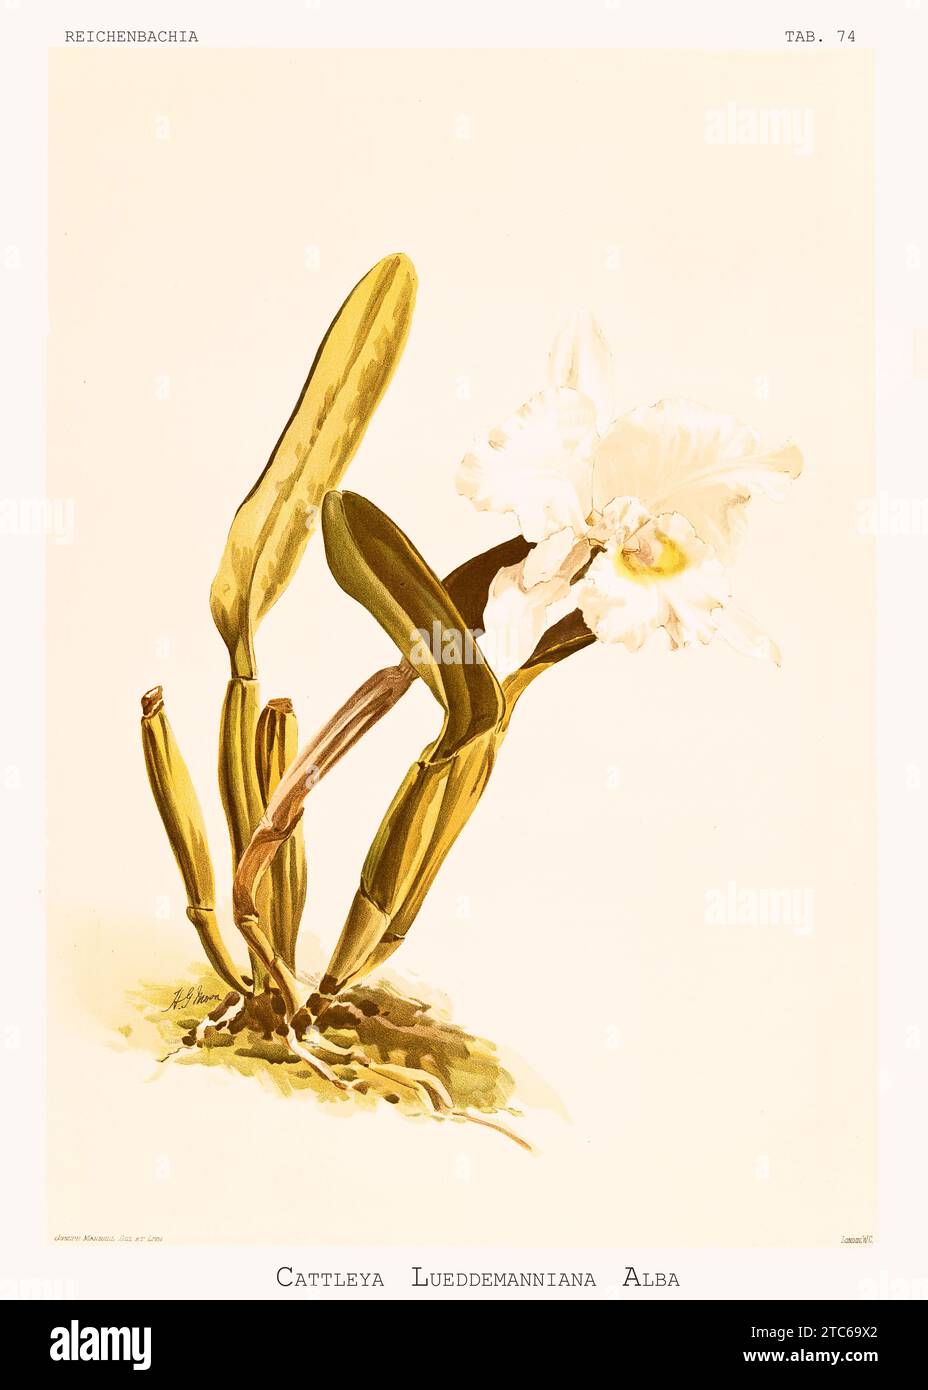 Old illustration of  Lueddemann's Cattleya (Cattleya lueddemanniana var. alba). Reichenbachia, by F. Sander. St. Albans, UK, 1888 - 1894 Stock Photo